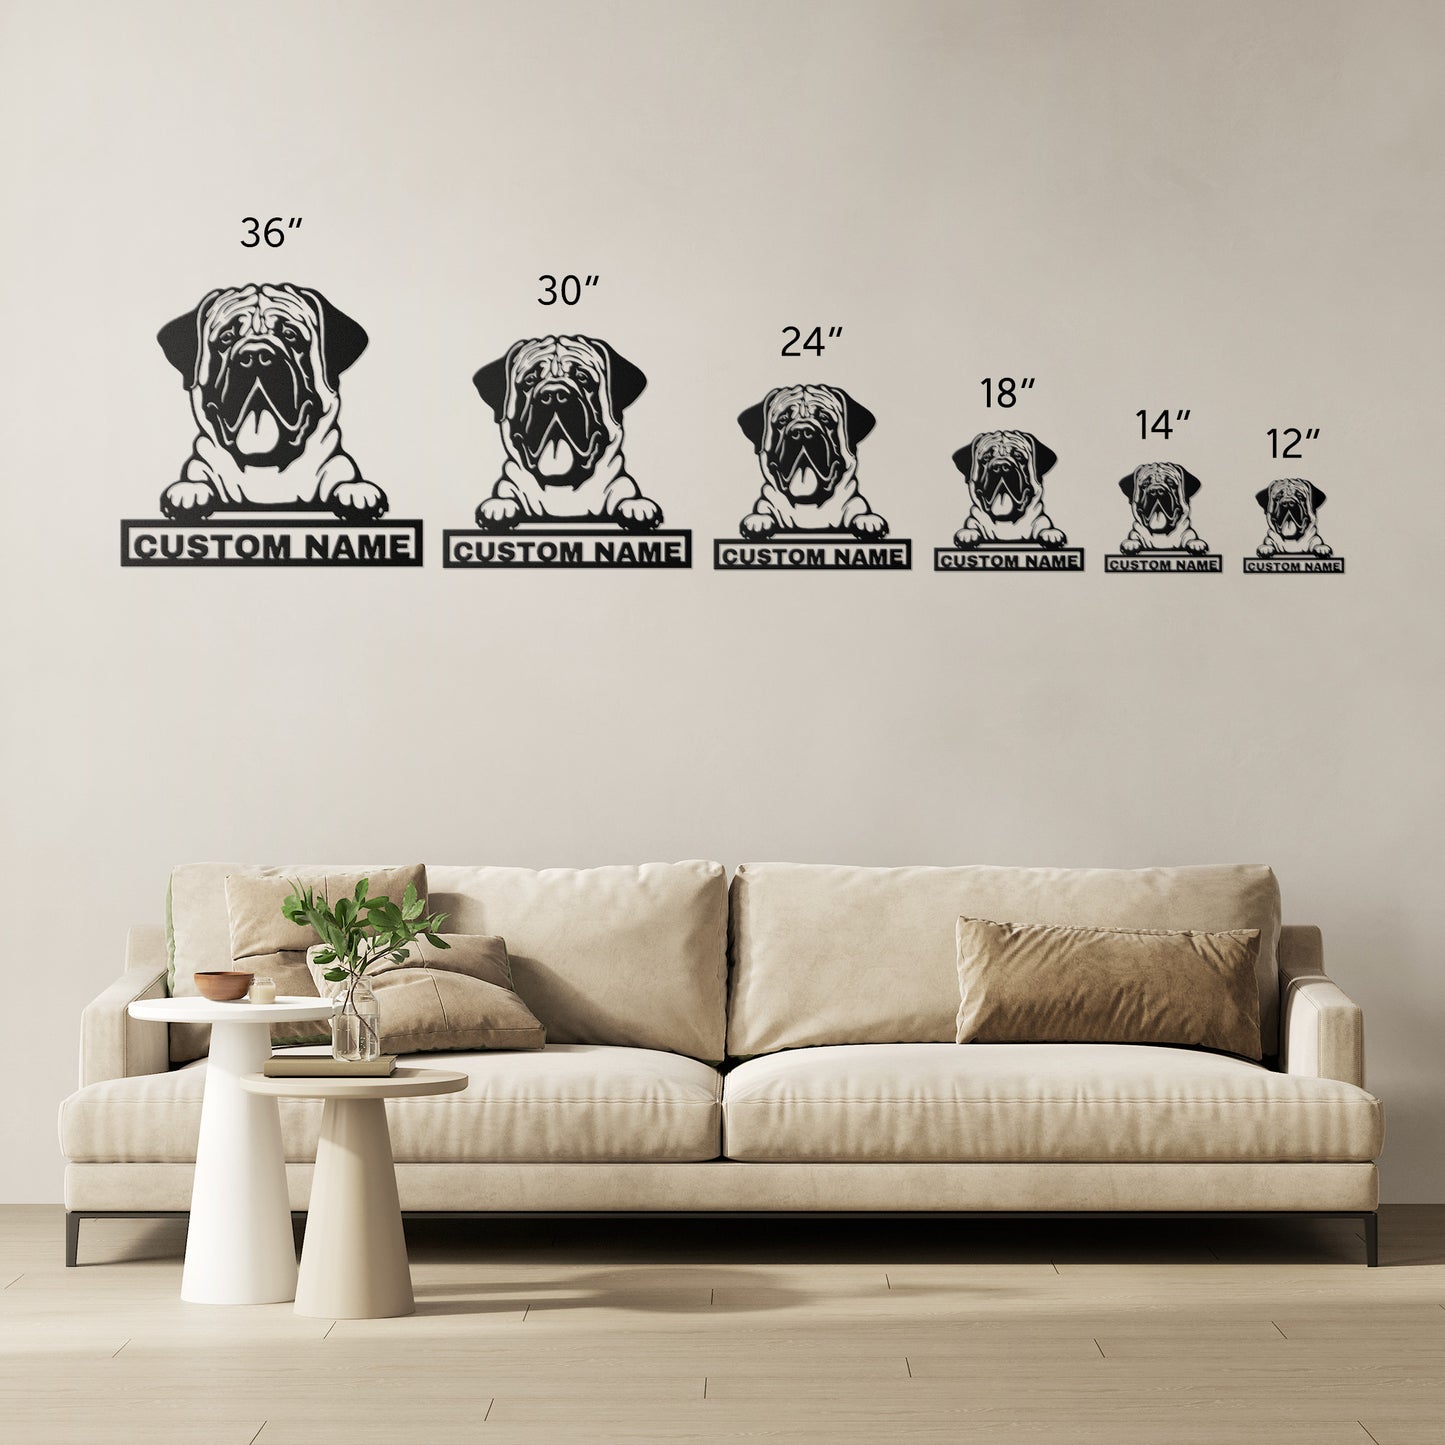 Personalized Mastiff Dog Metal Sign - Mastiff Custom Name Wall Decor, Metal Signs Customized Outdoor Indoor, Wall Art Gift For Mastiff Dog Lover